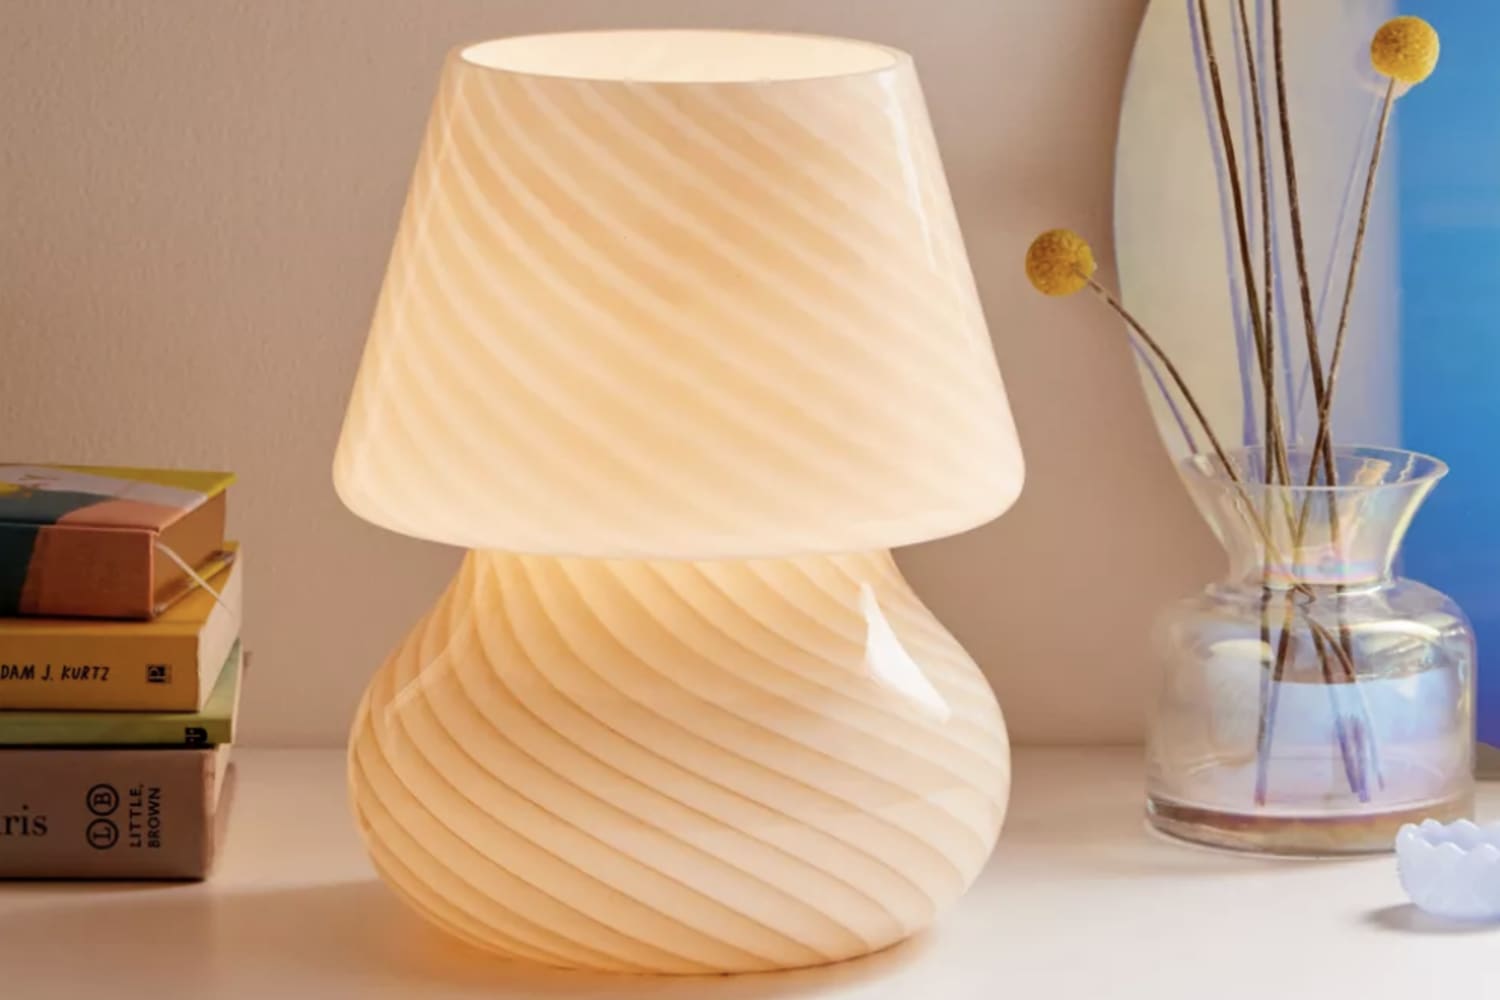 The Best Mushroom Lamps - Murano Glass Mushroom Lamp Trend